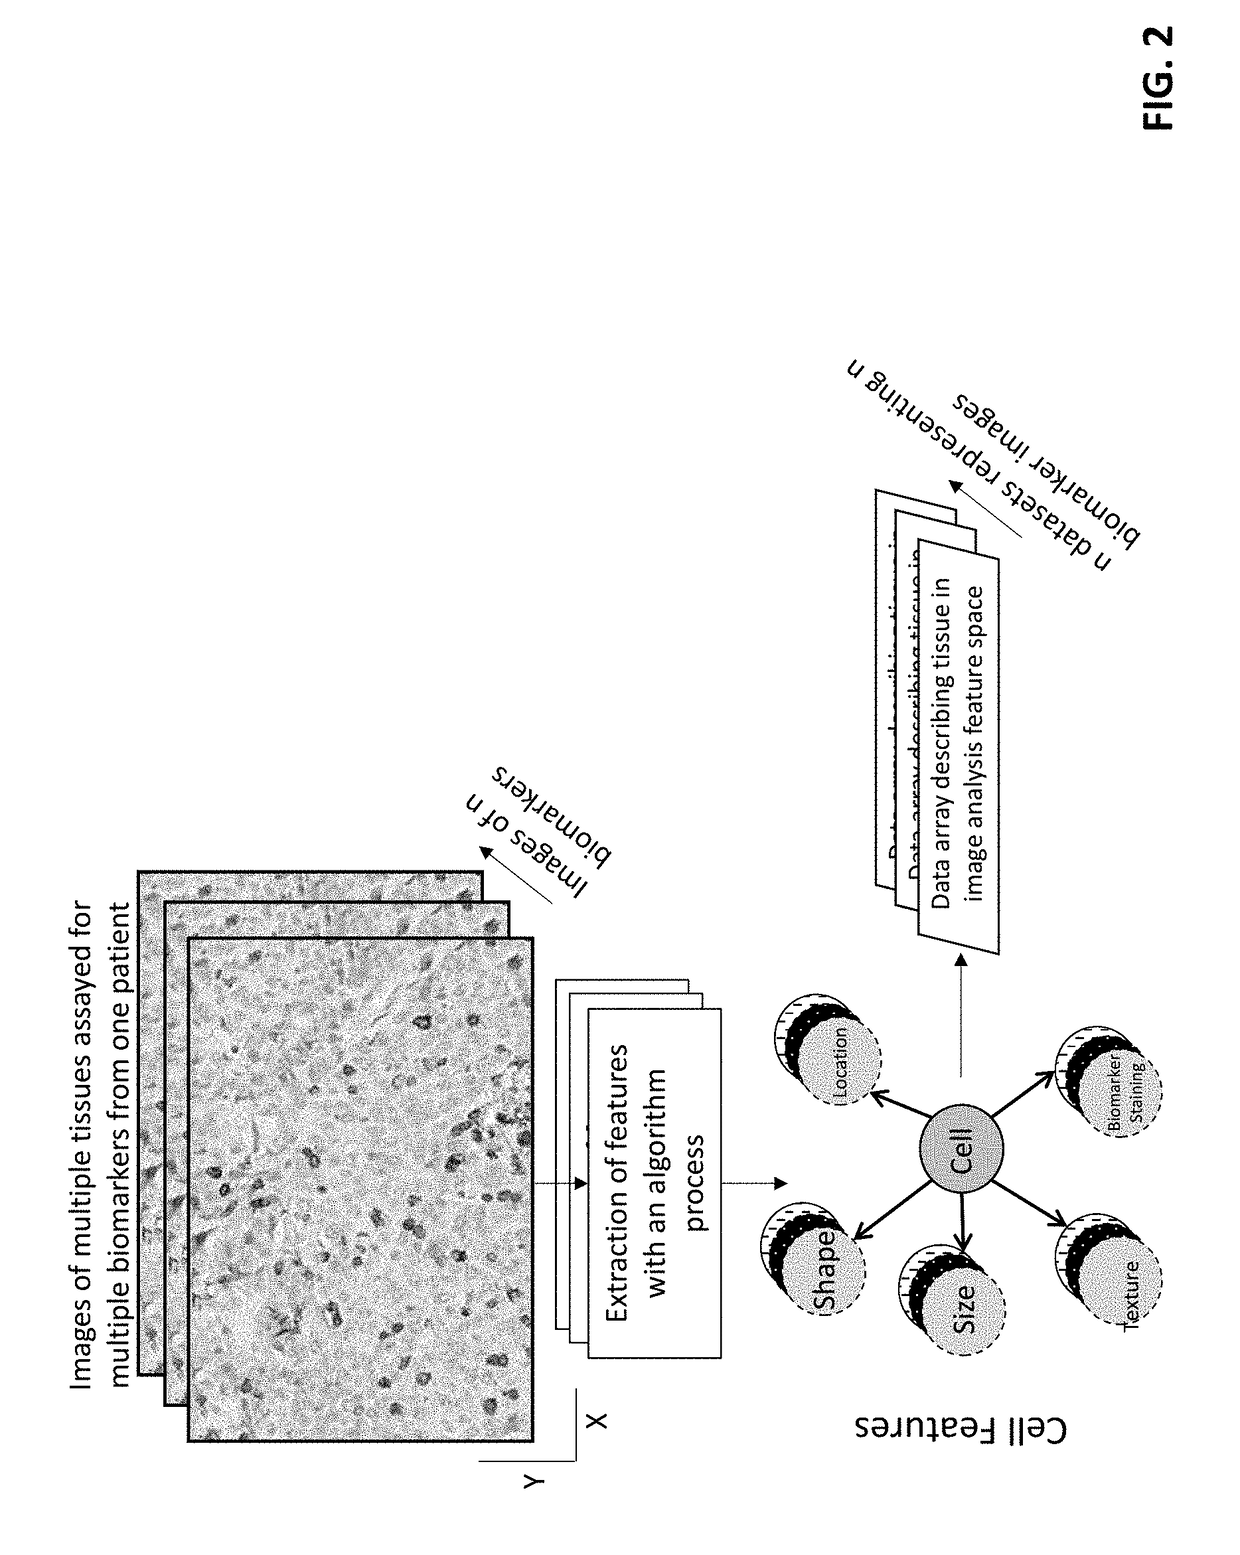 Method for scoring pathology images using spatial analysis of tissues